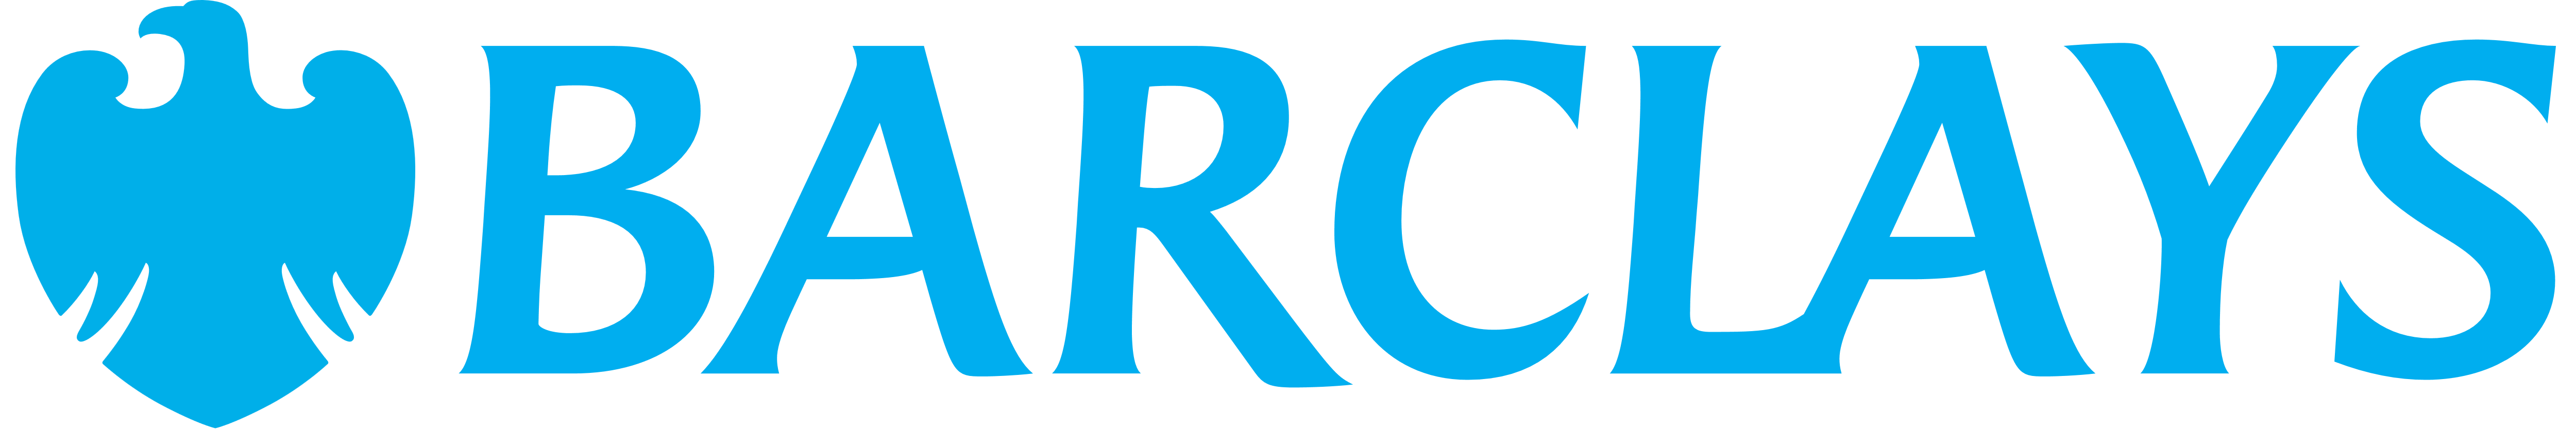 Barclays business bank account logo